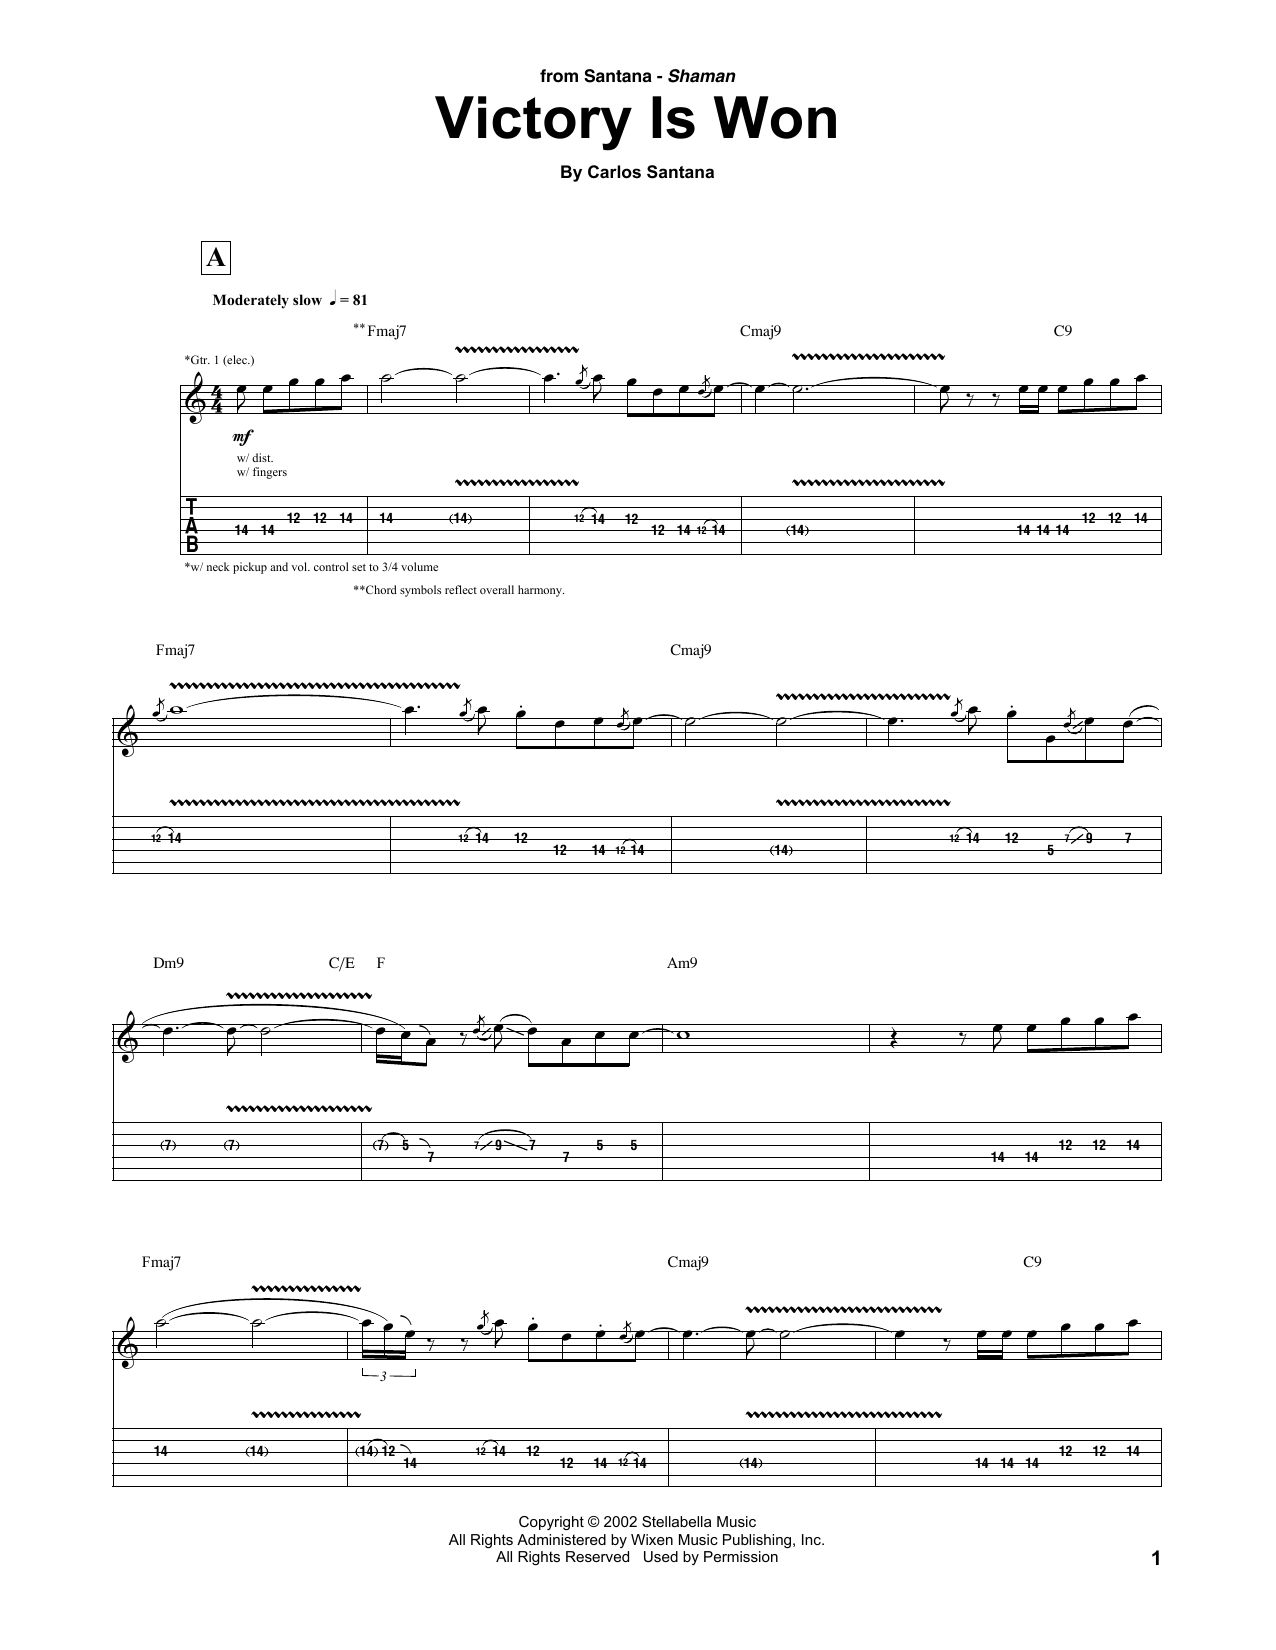 Carlos Santana Victory Is Won Sheet Music Notes & Chords for Guitar Tab - Download or Print PDF